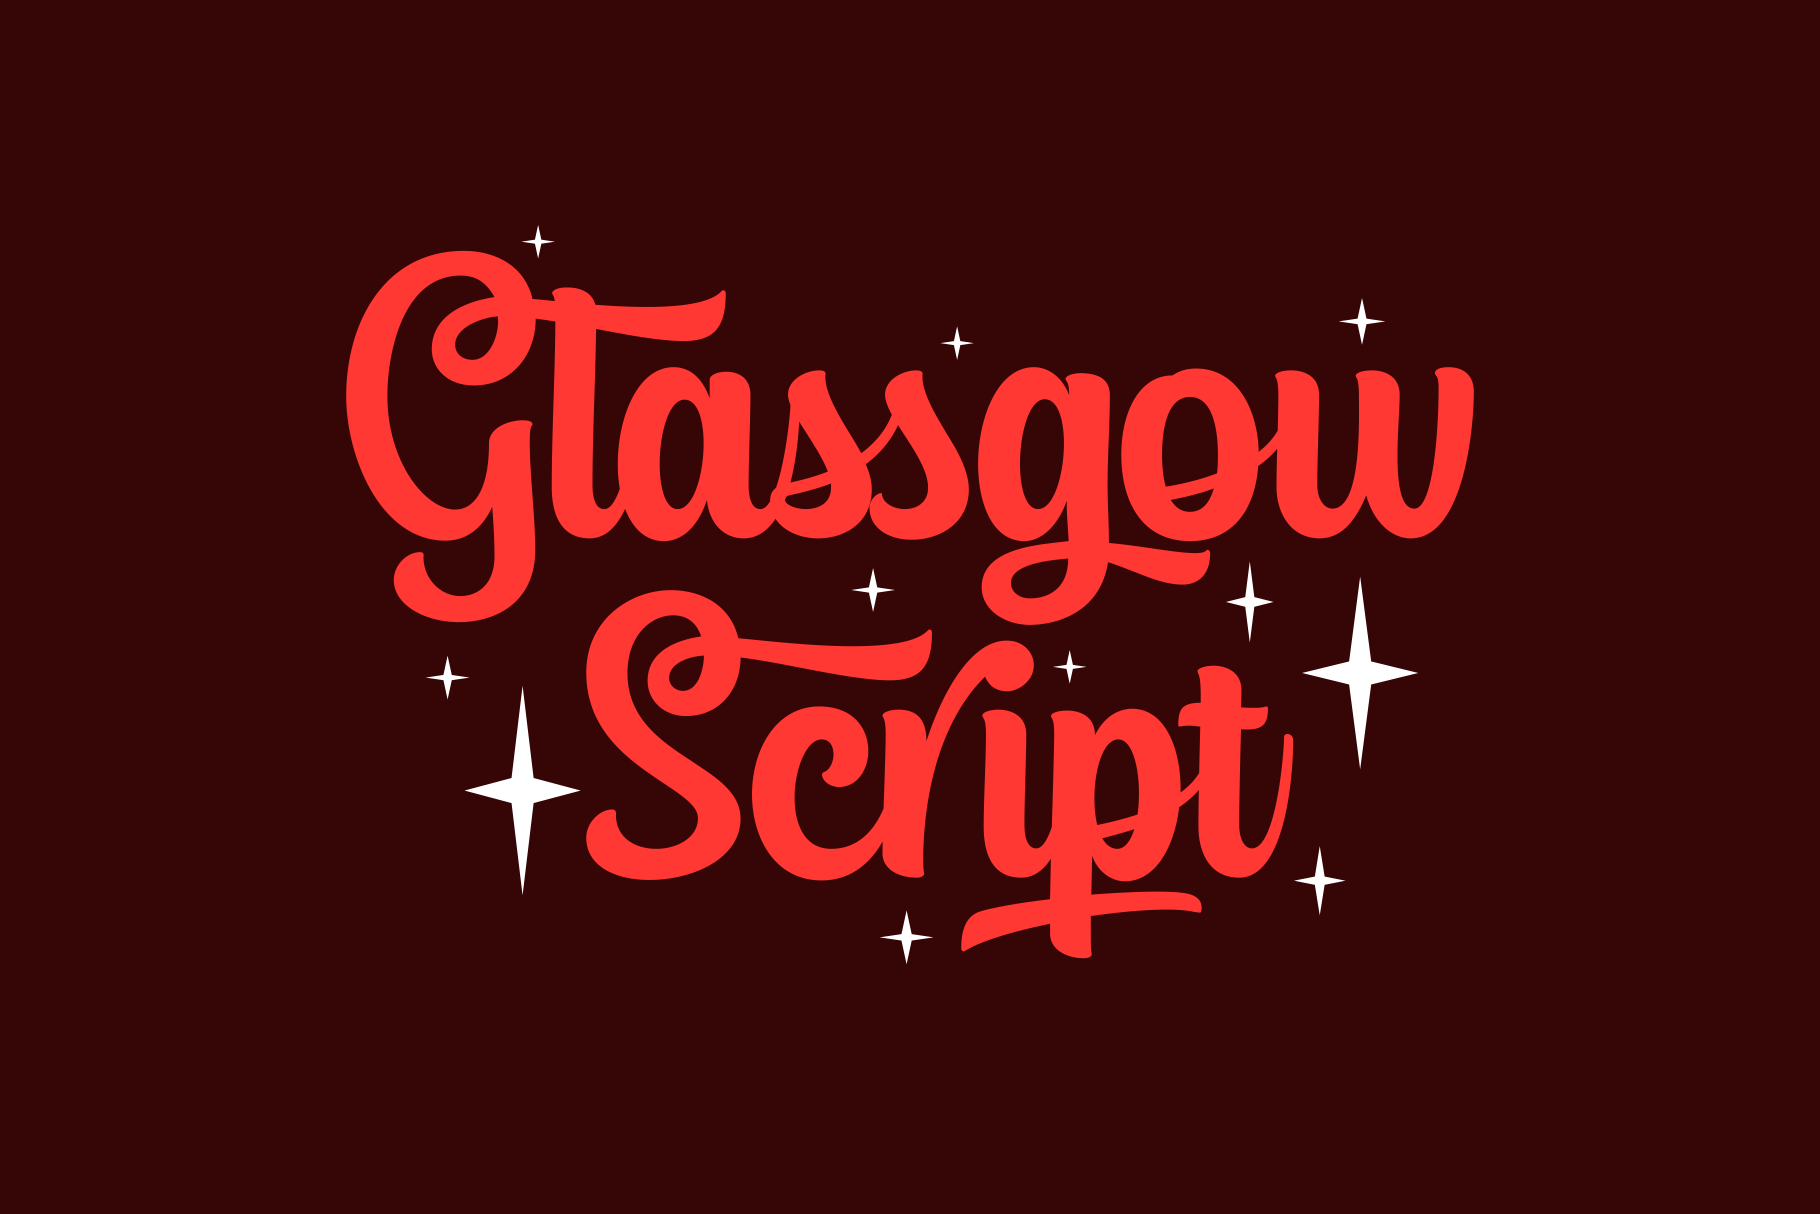 Glassgow Script Free Font